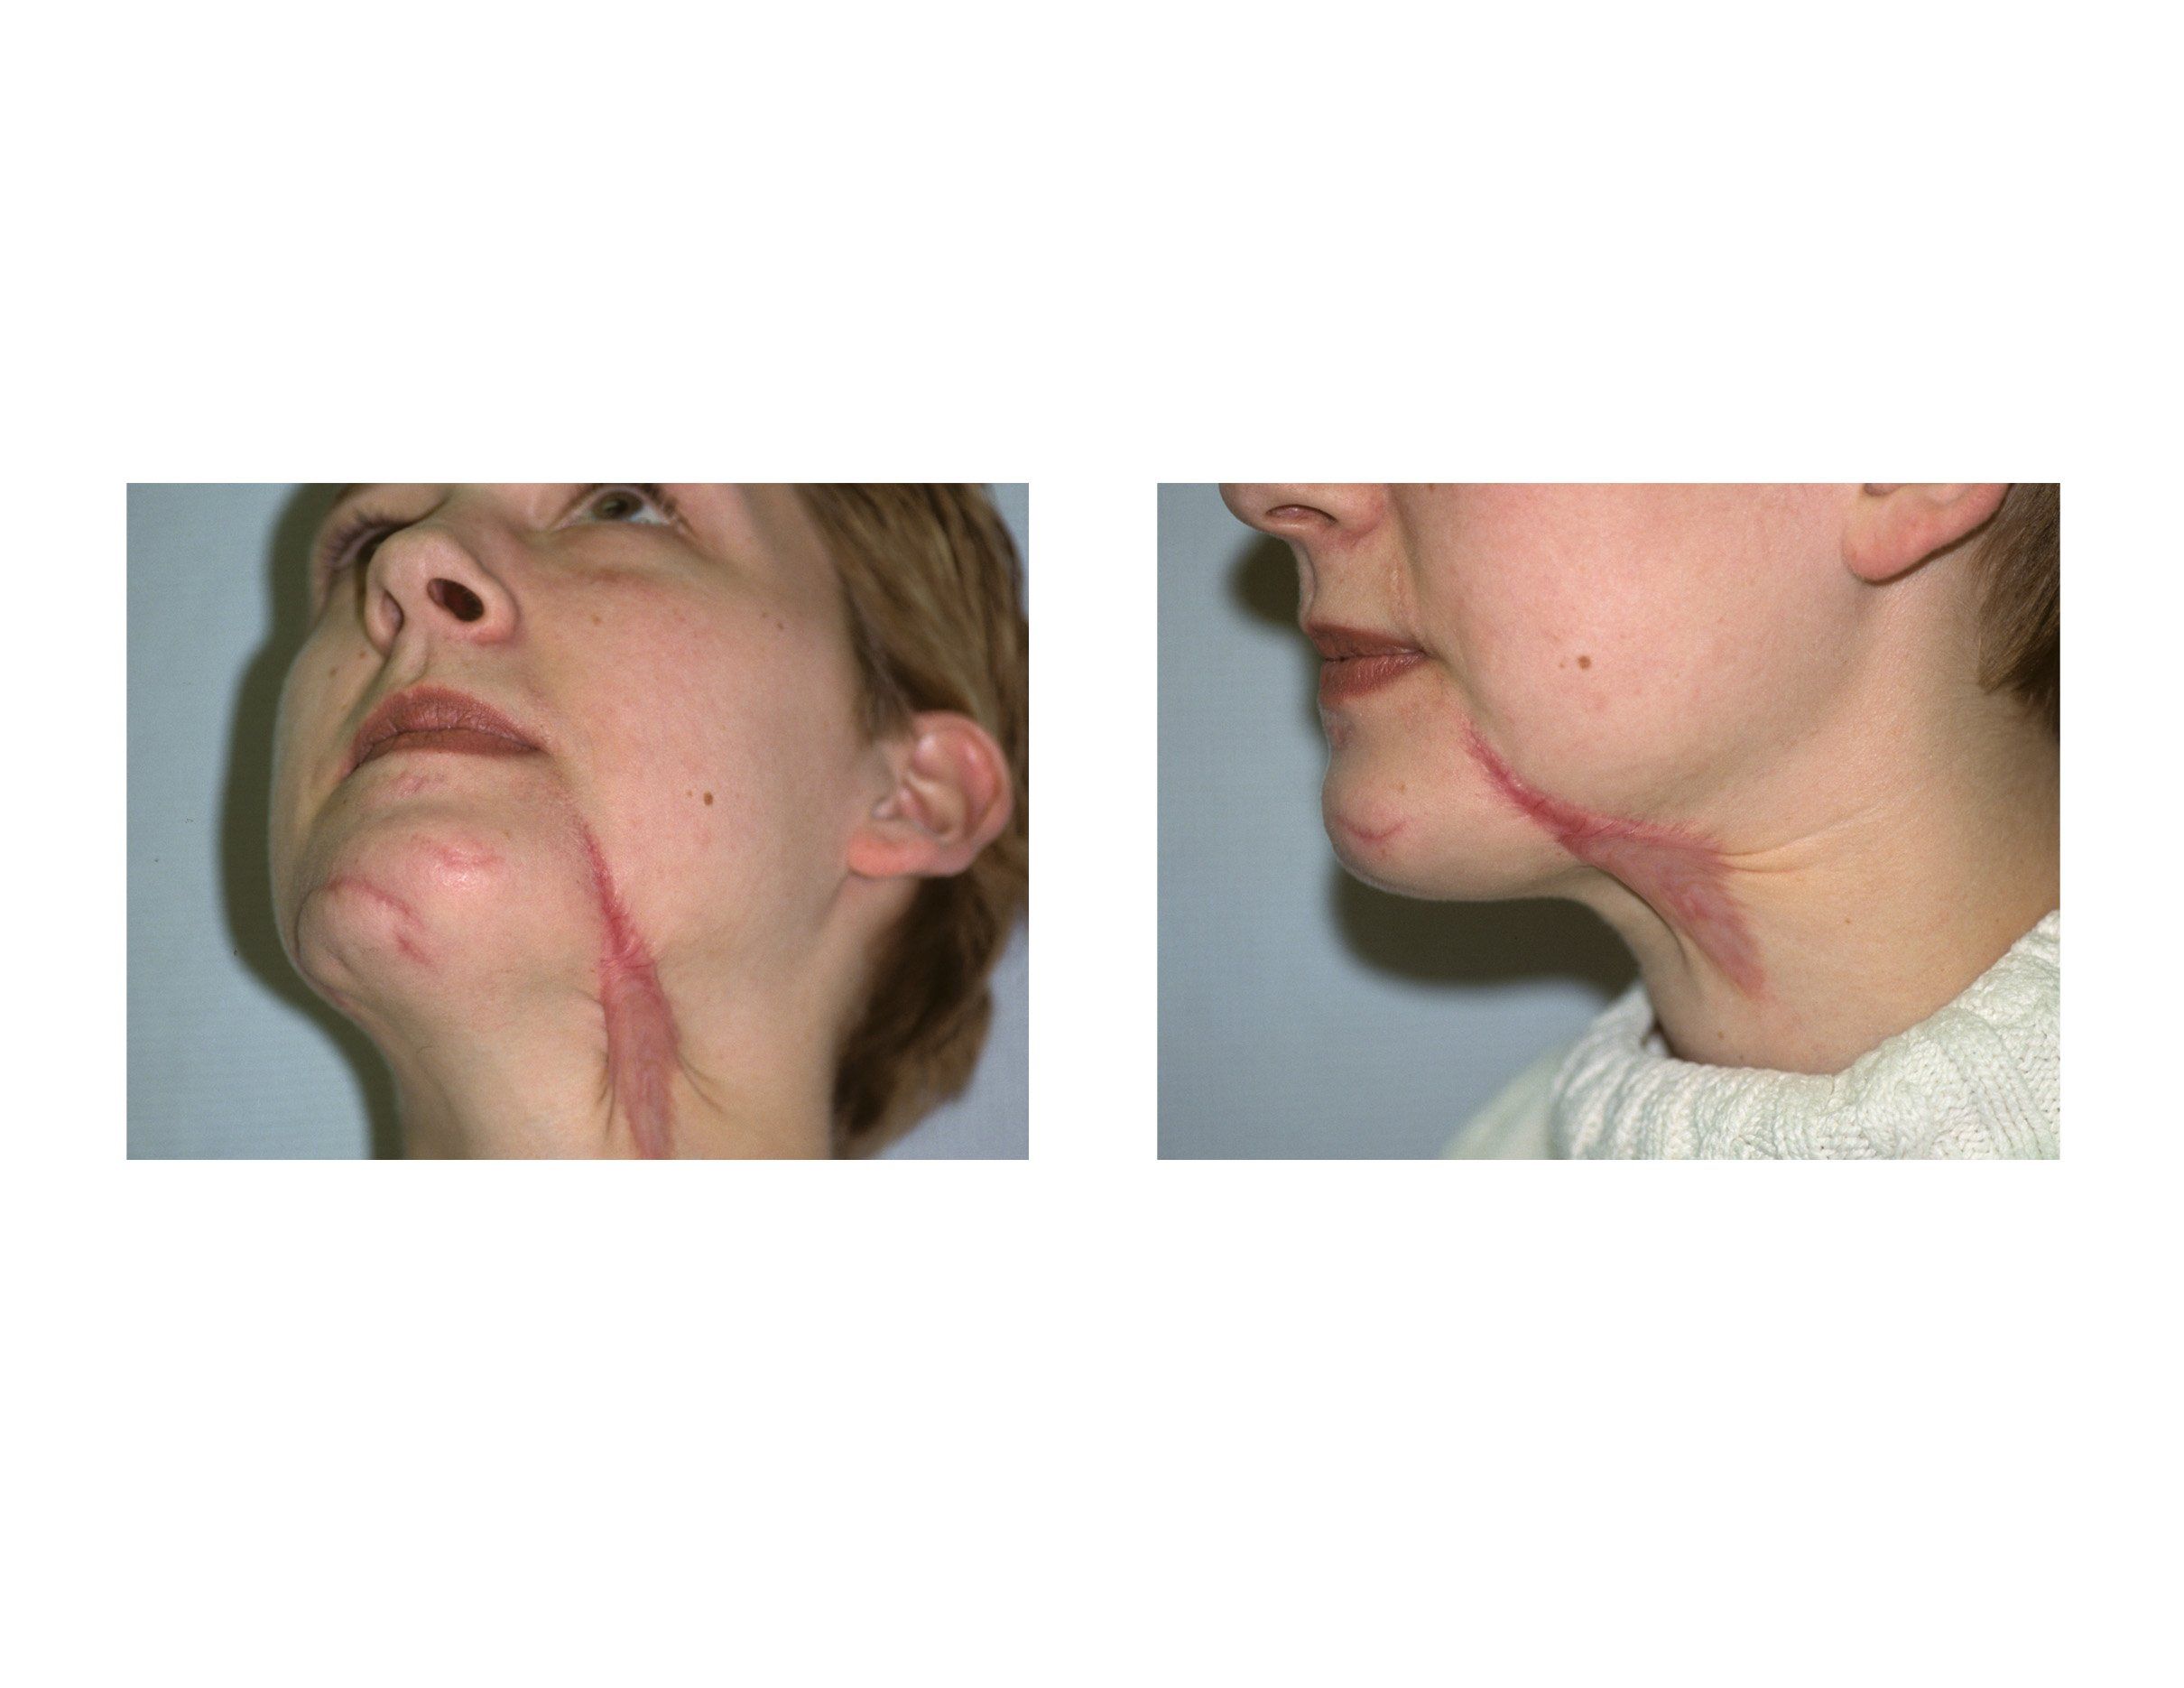 Facial laceration scar fading